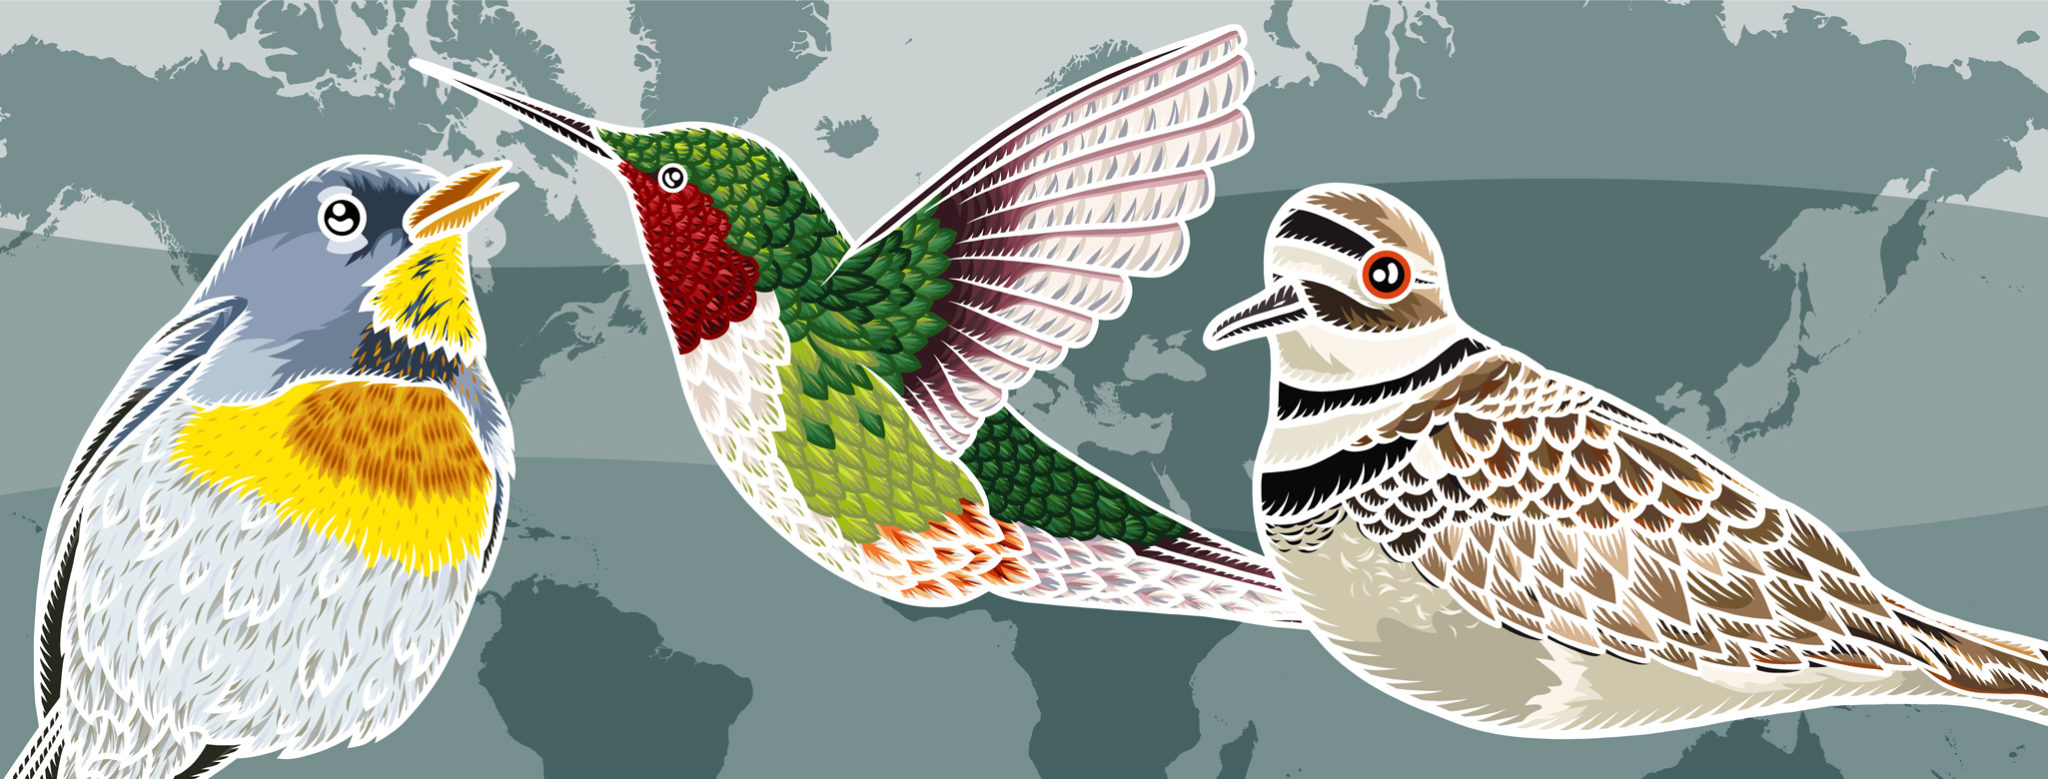 Three cartoon birds among a background of the world map